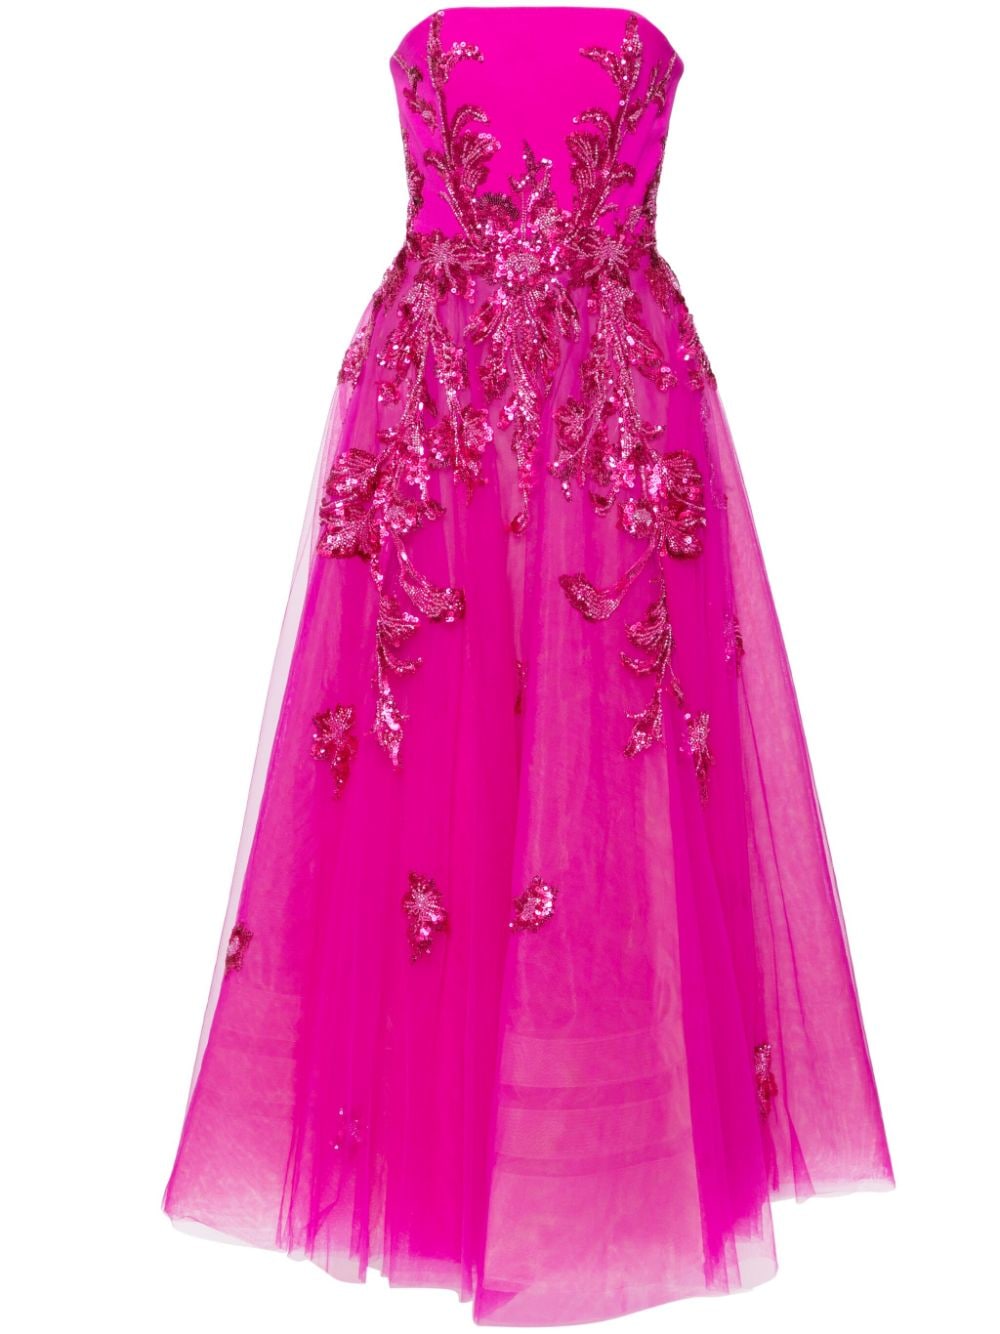 Saiid Kobeisy beaded tulle strapless gown - Pink von Saiid Kobeisy